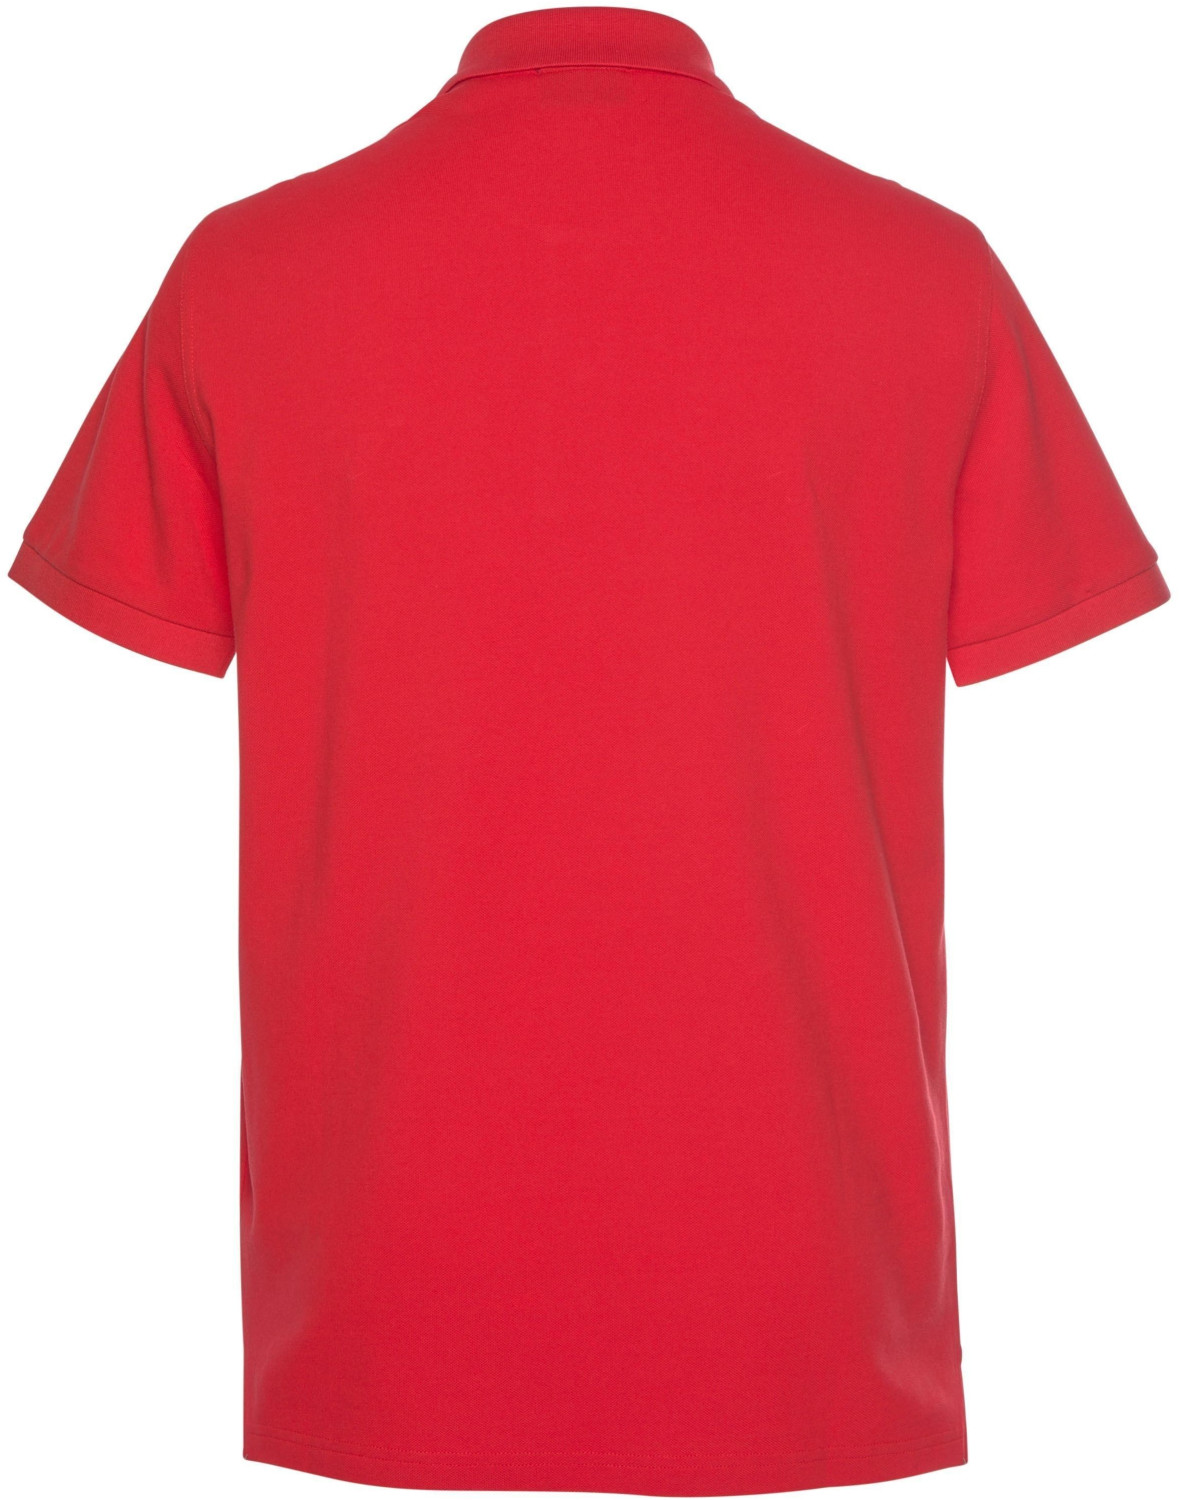 GANT Bestseller Piqué Polo Shirt (2201) bright red ab 51,95 € |  Preisvergleich bei